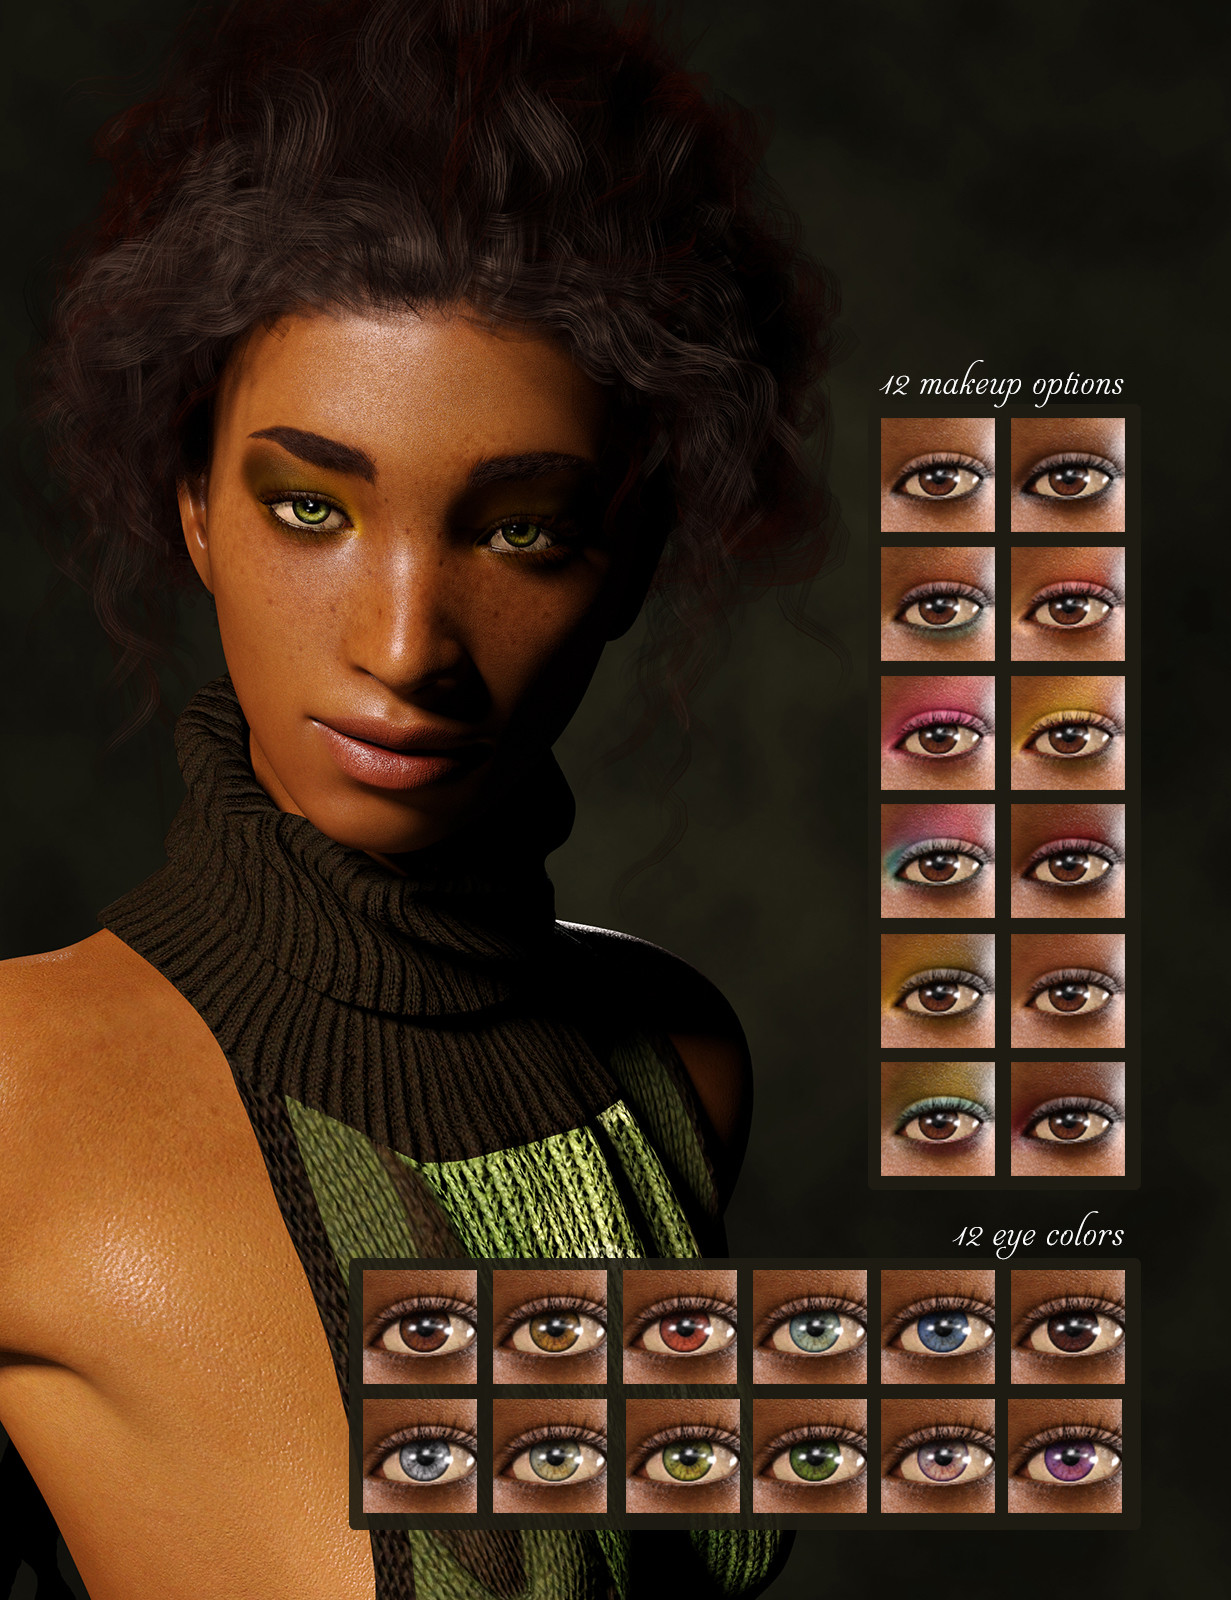 Eye colors &amp; makeup options